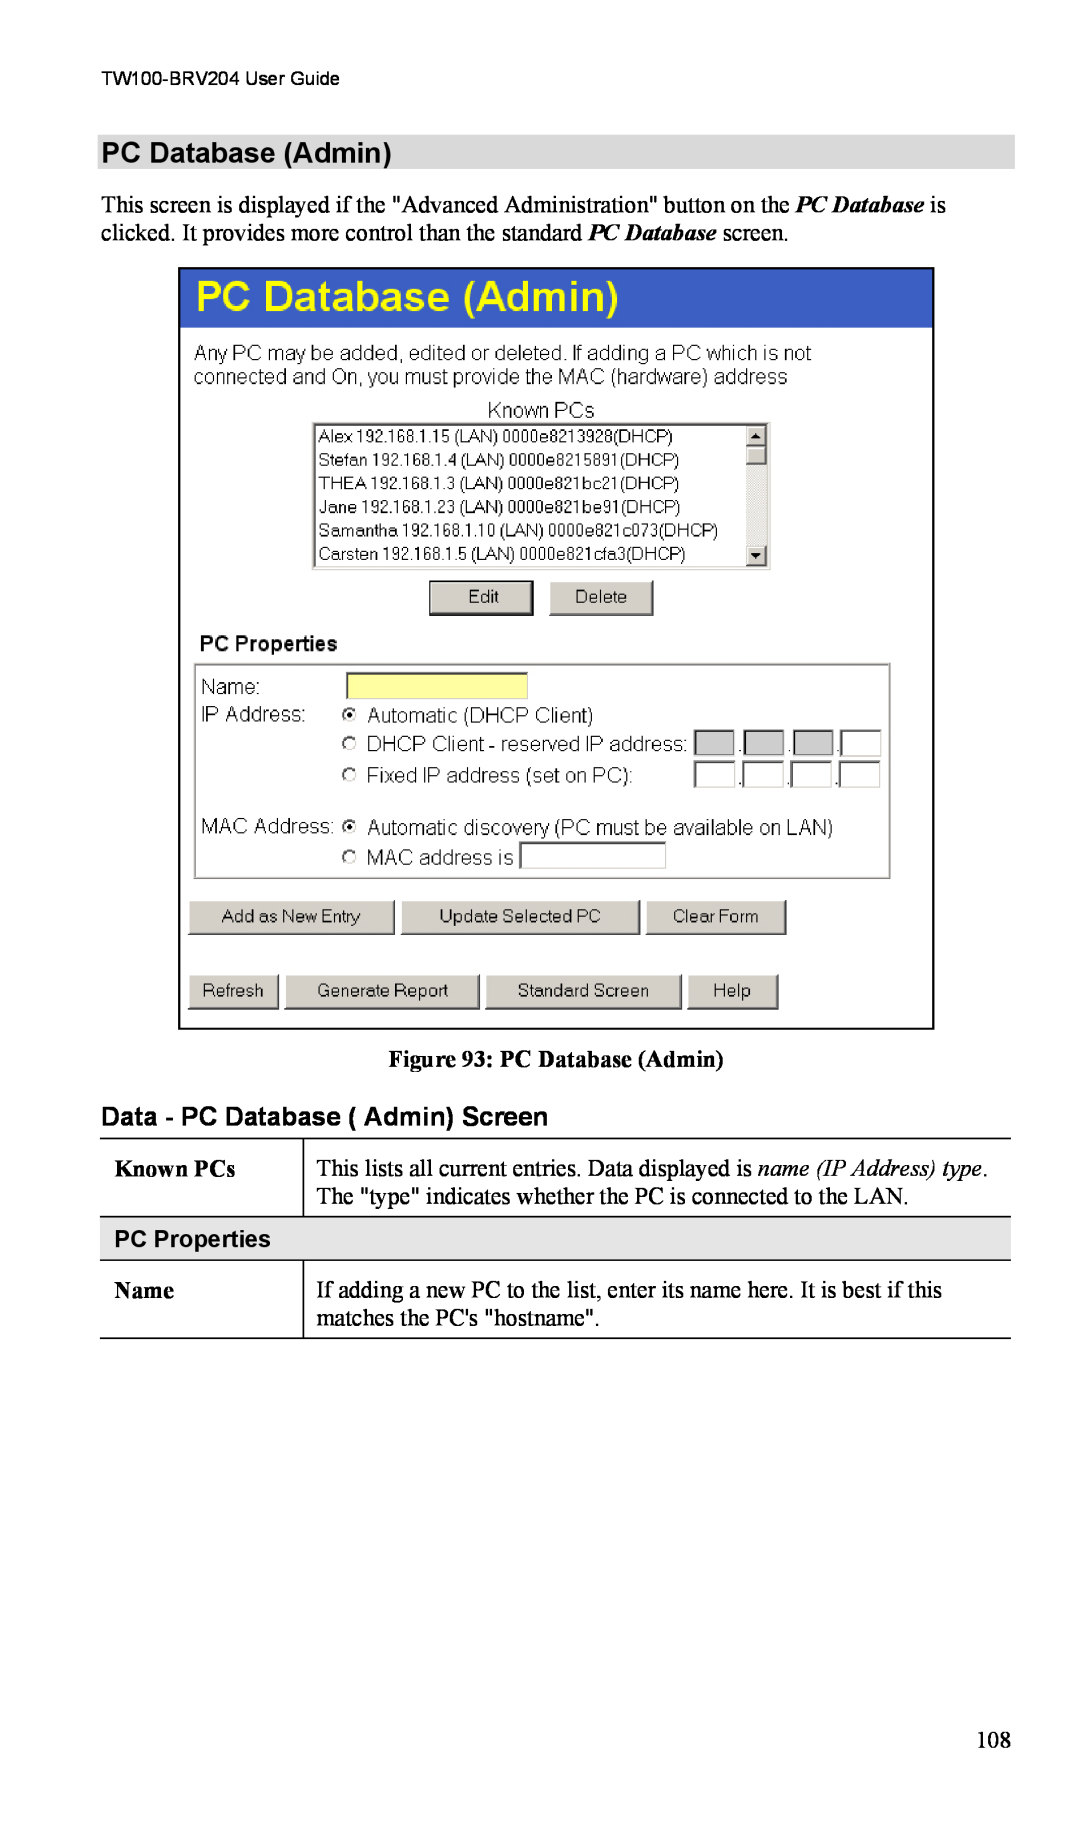 TRENDnet VPN Firewall Router, TW100-BRV204 manual Data - PC Database Admin Screen, PC Properties 